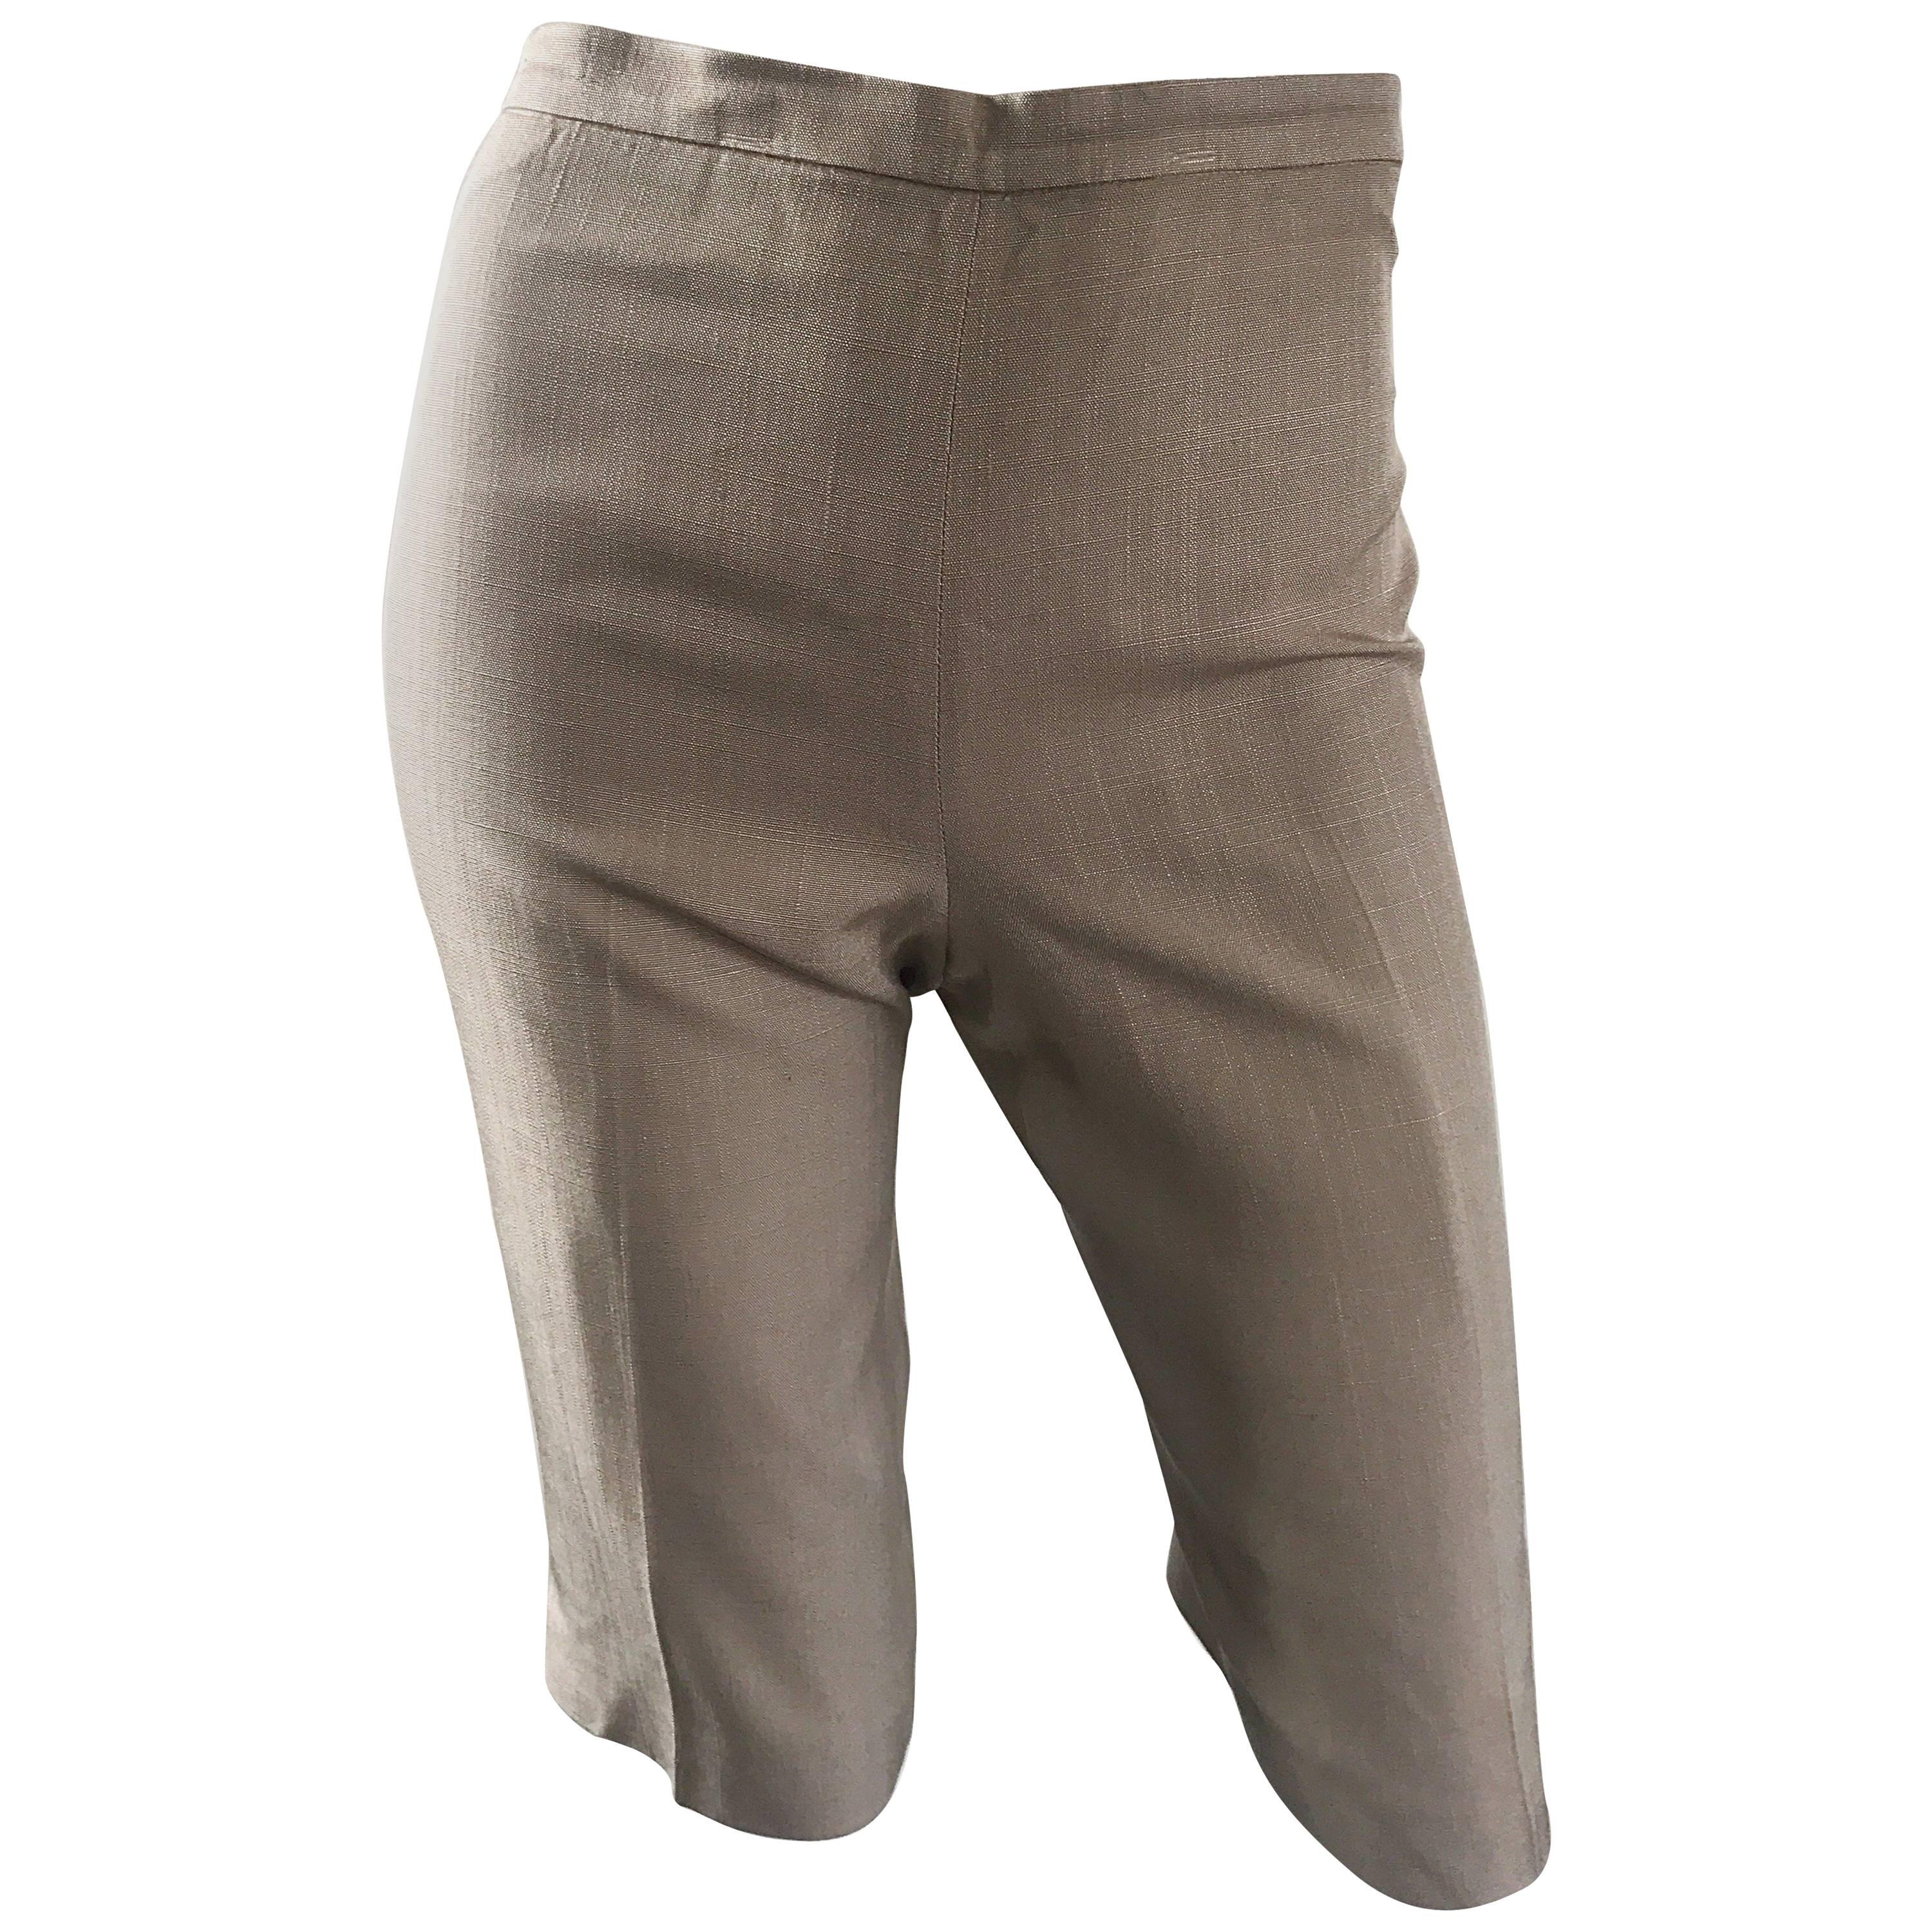 Vintage Michael Kors Collection 1990s Khaki Silk Cropped Capri Pants Shorts Sz 6